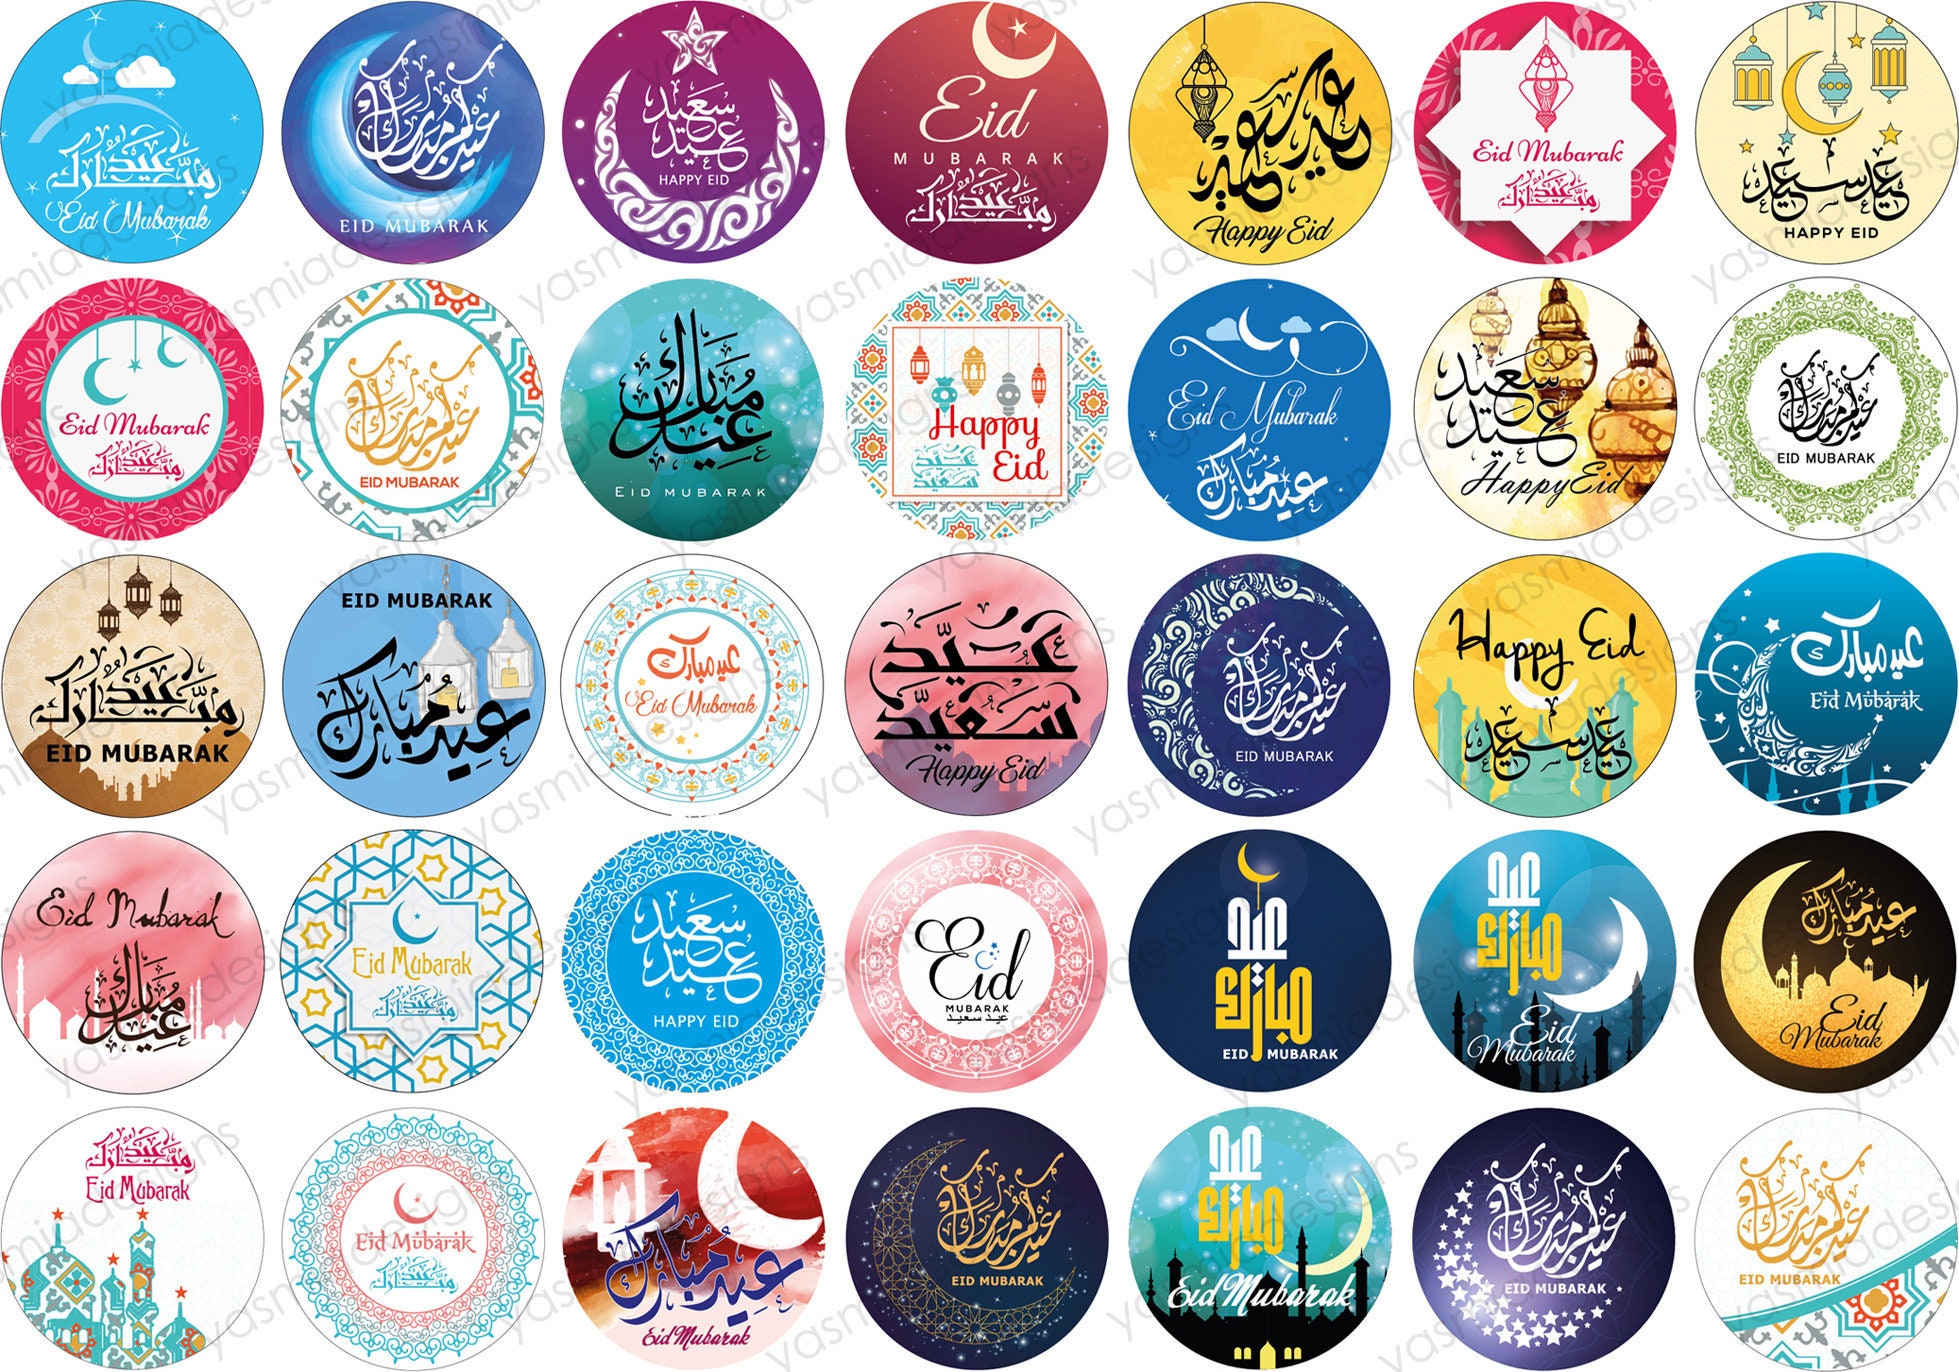 eid-mubarak-stickers-paper-stickers-labels-tags-stickers-chasecreek